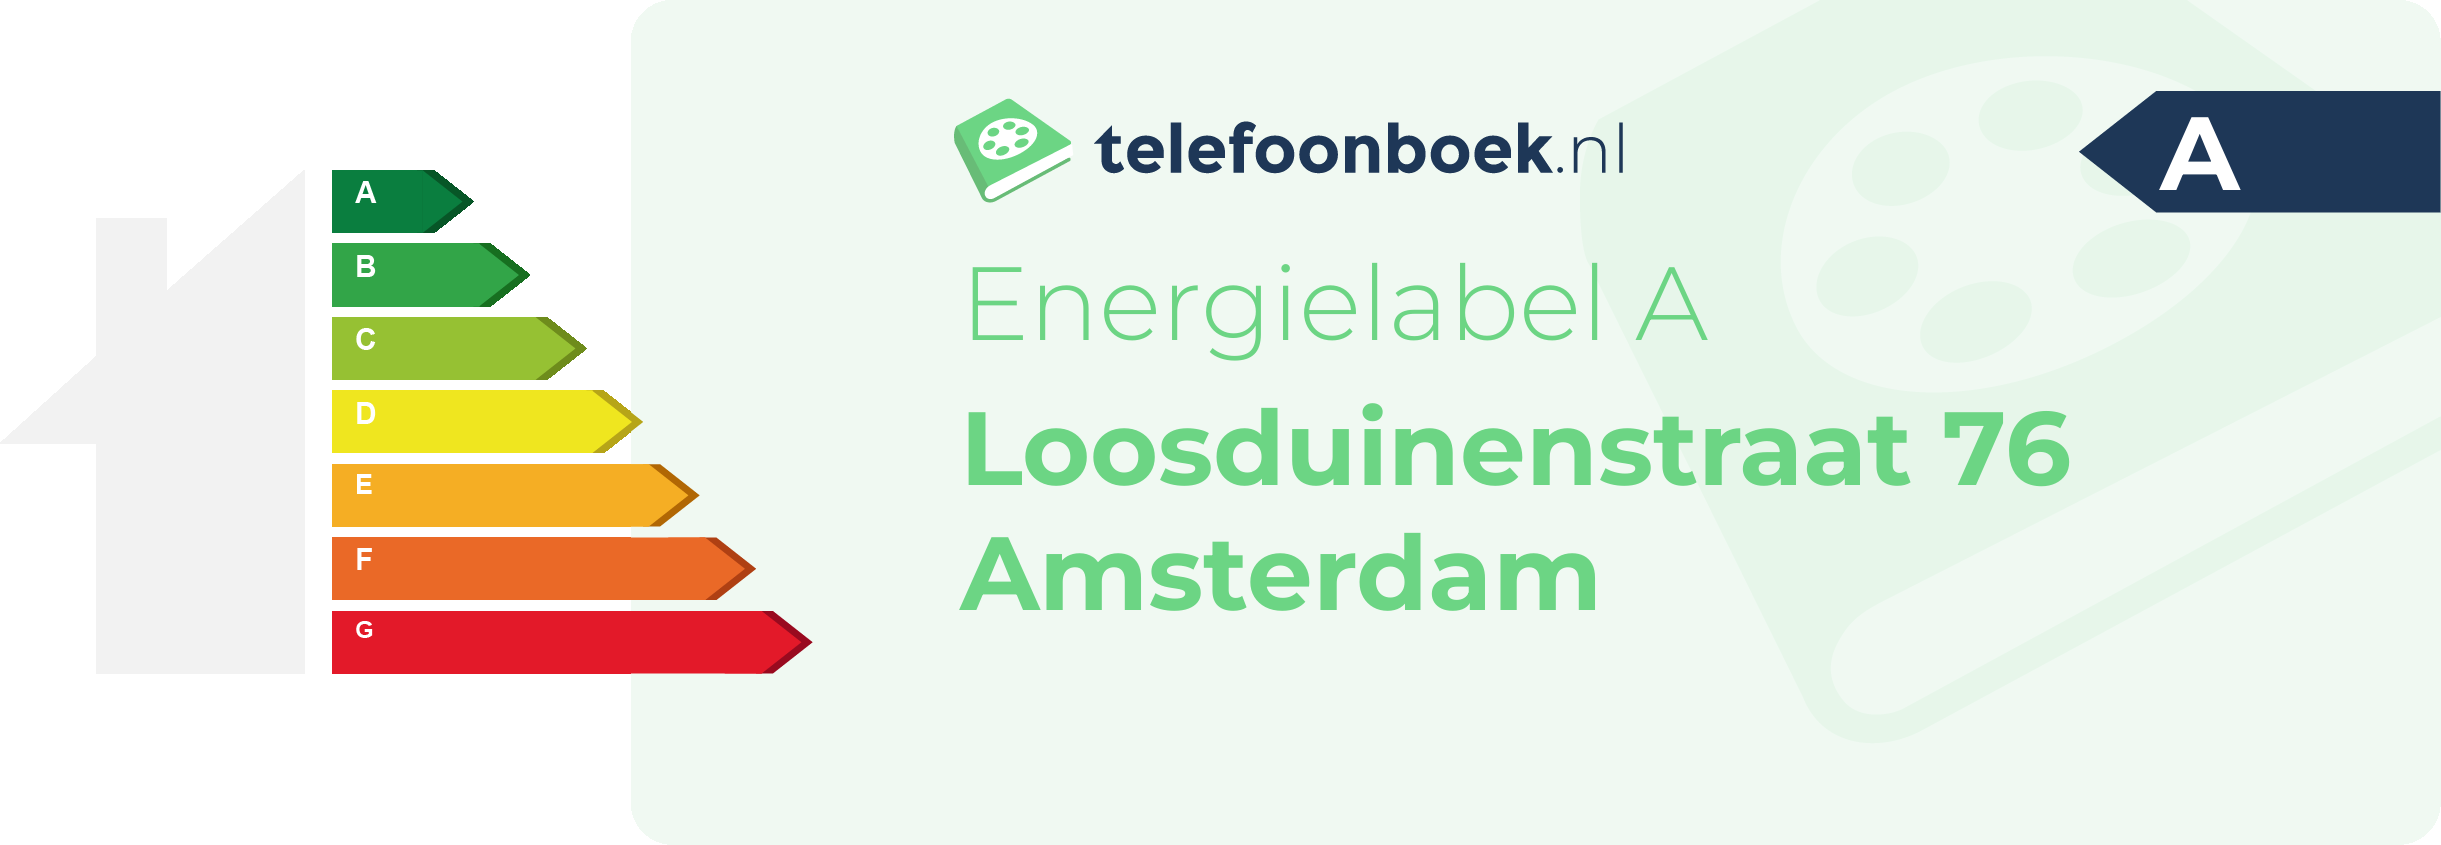 Energielabel Loosduinenstraat 76 Amsterdam